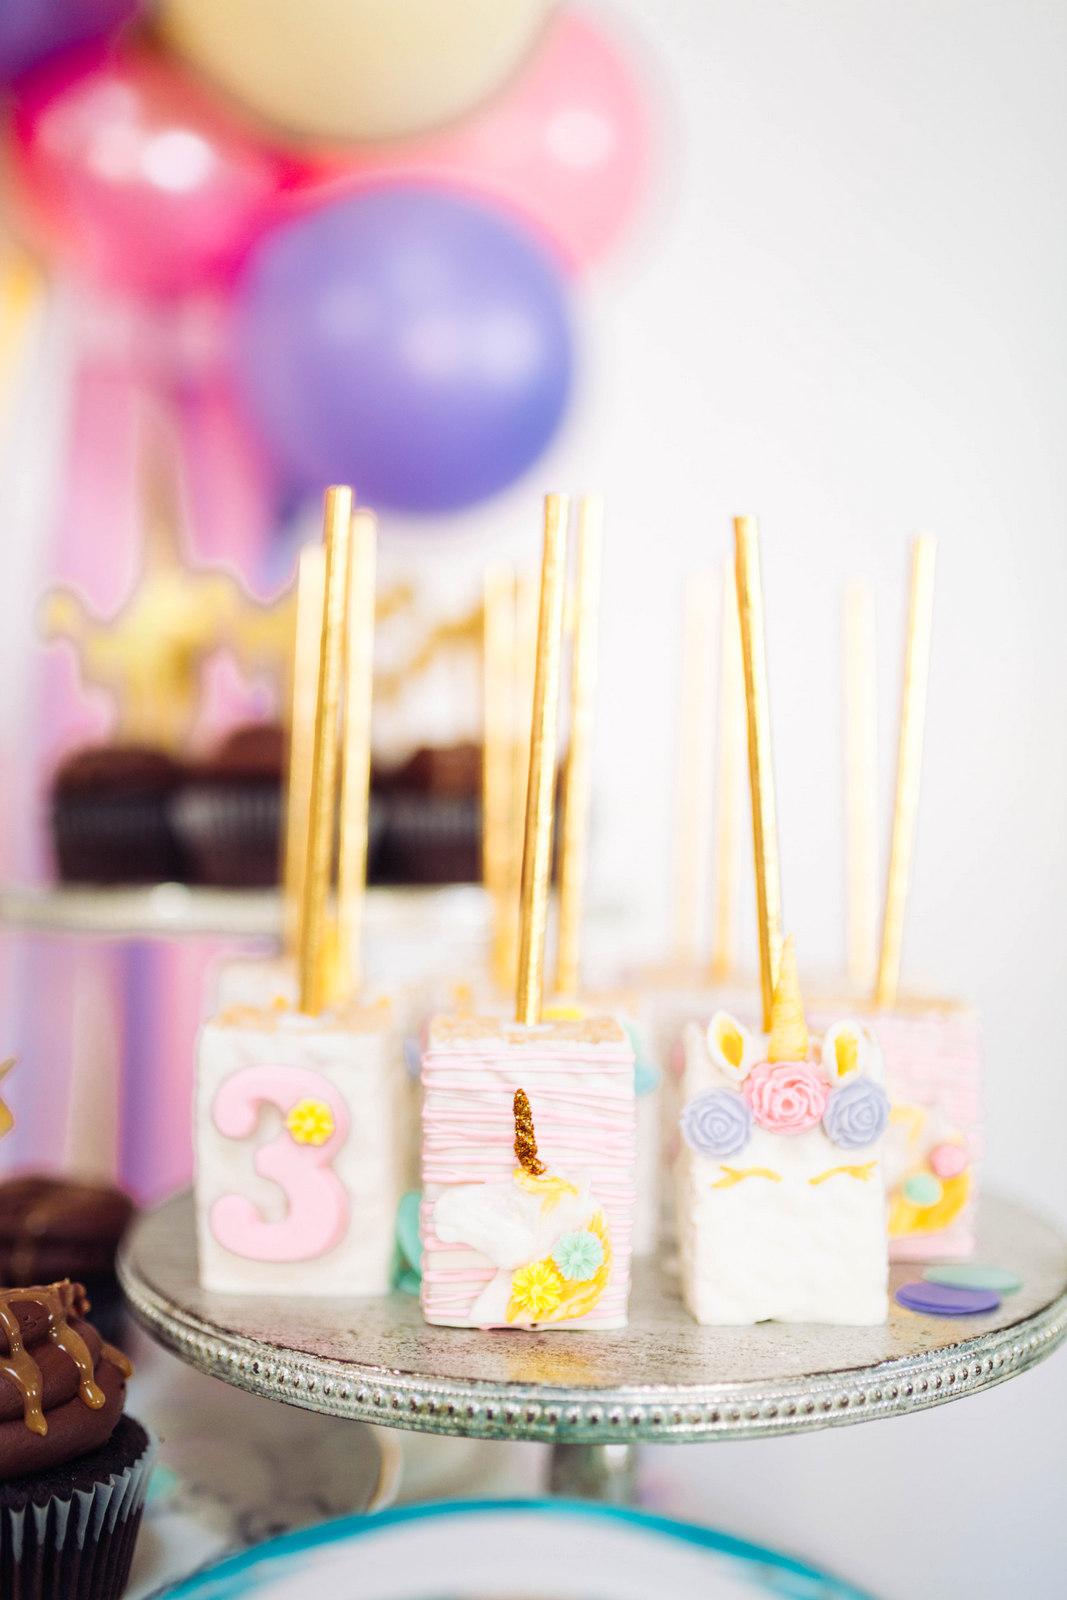 A Magical Unicorn Birthday Party - Vivian's 3rd Birthday! by Utah mom blogger Sandy A La Mode